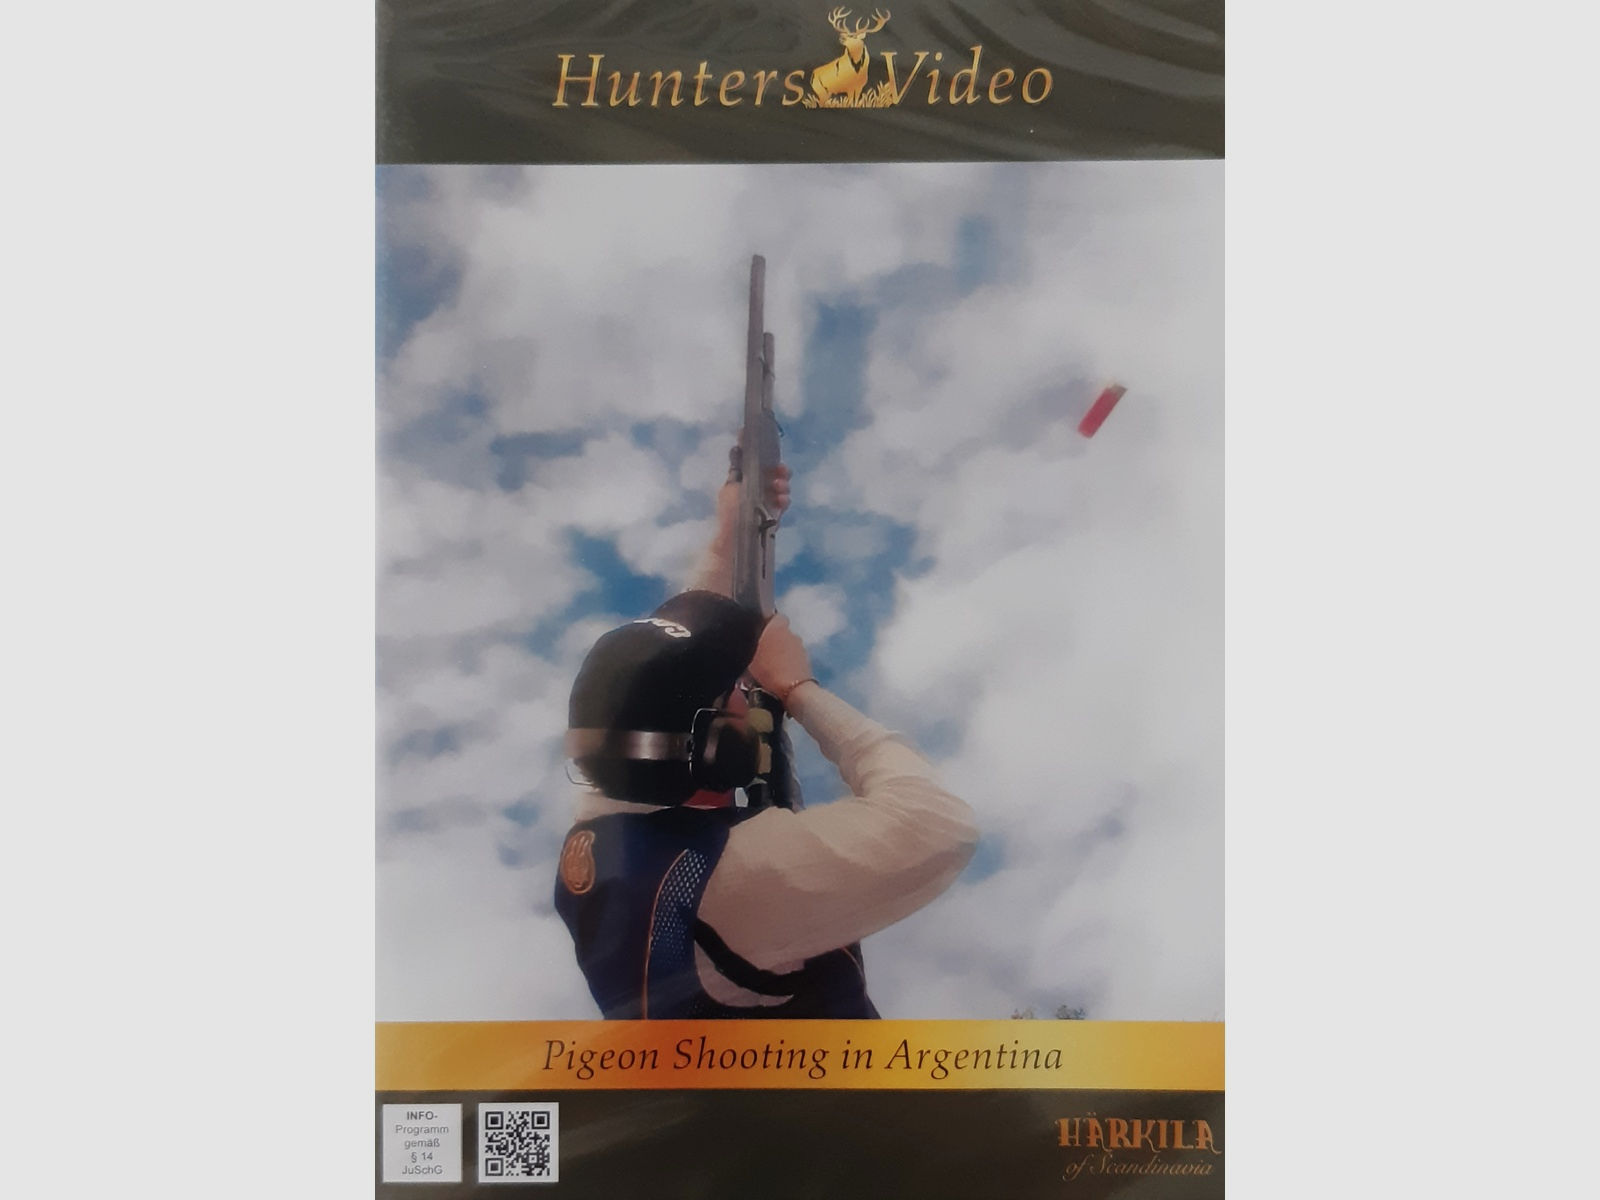 Hunters Video - DVD Taubenjagd in Argentinien